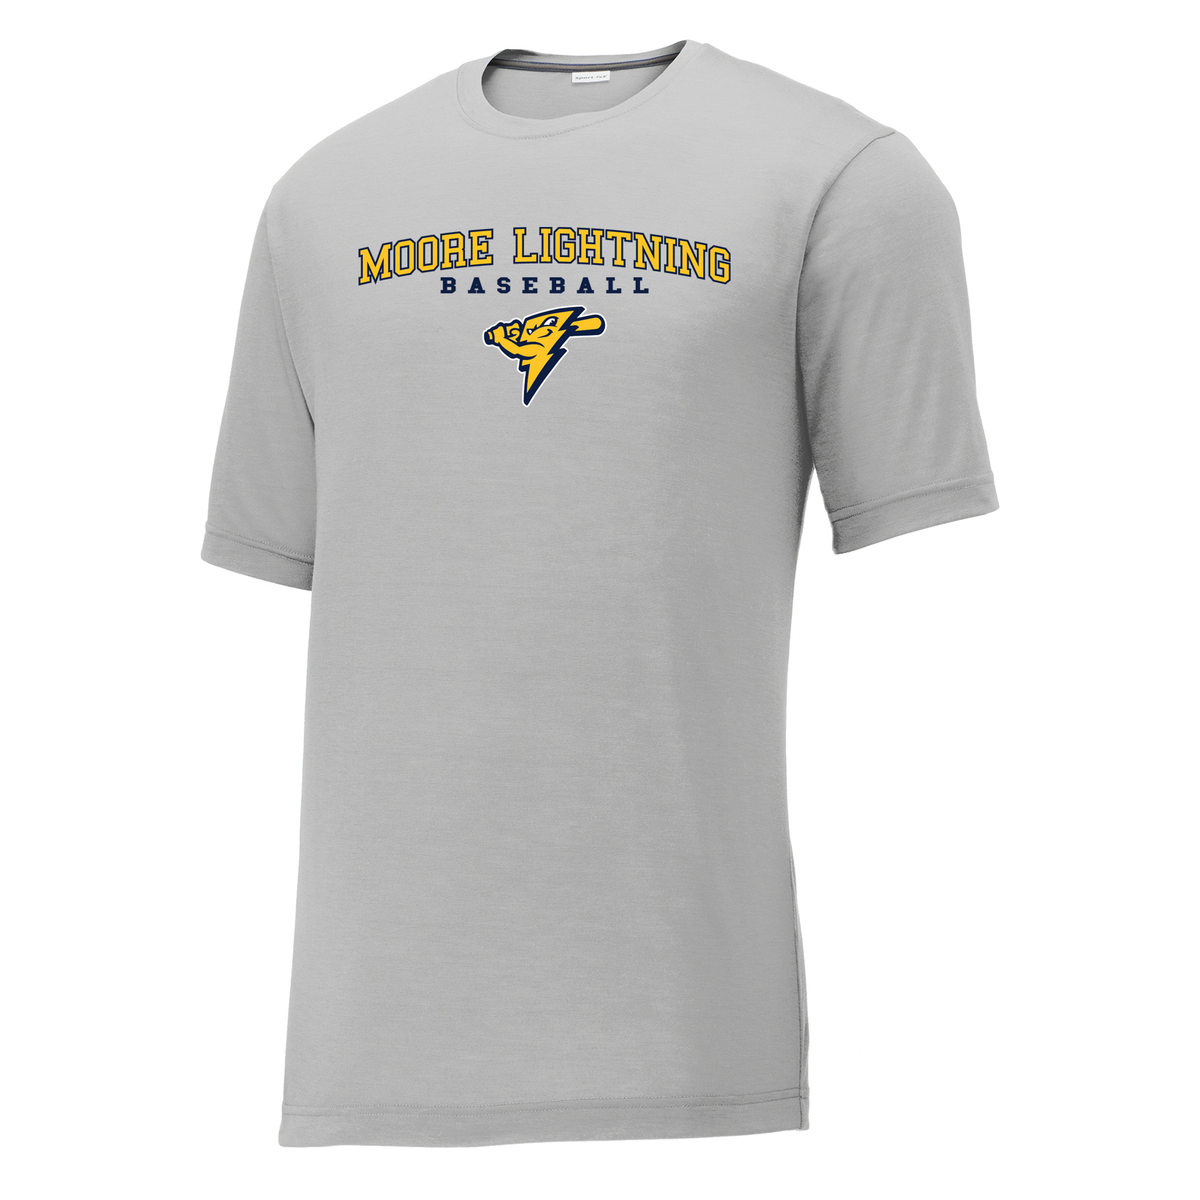 Moore Lightning Baseball CottonTouch Performance T-Shirt